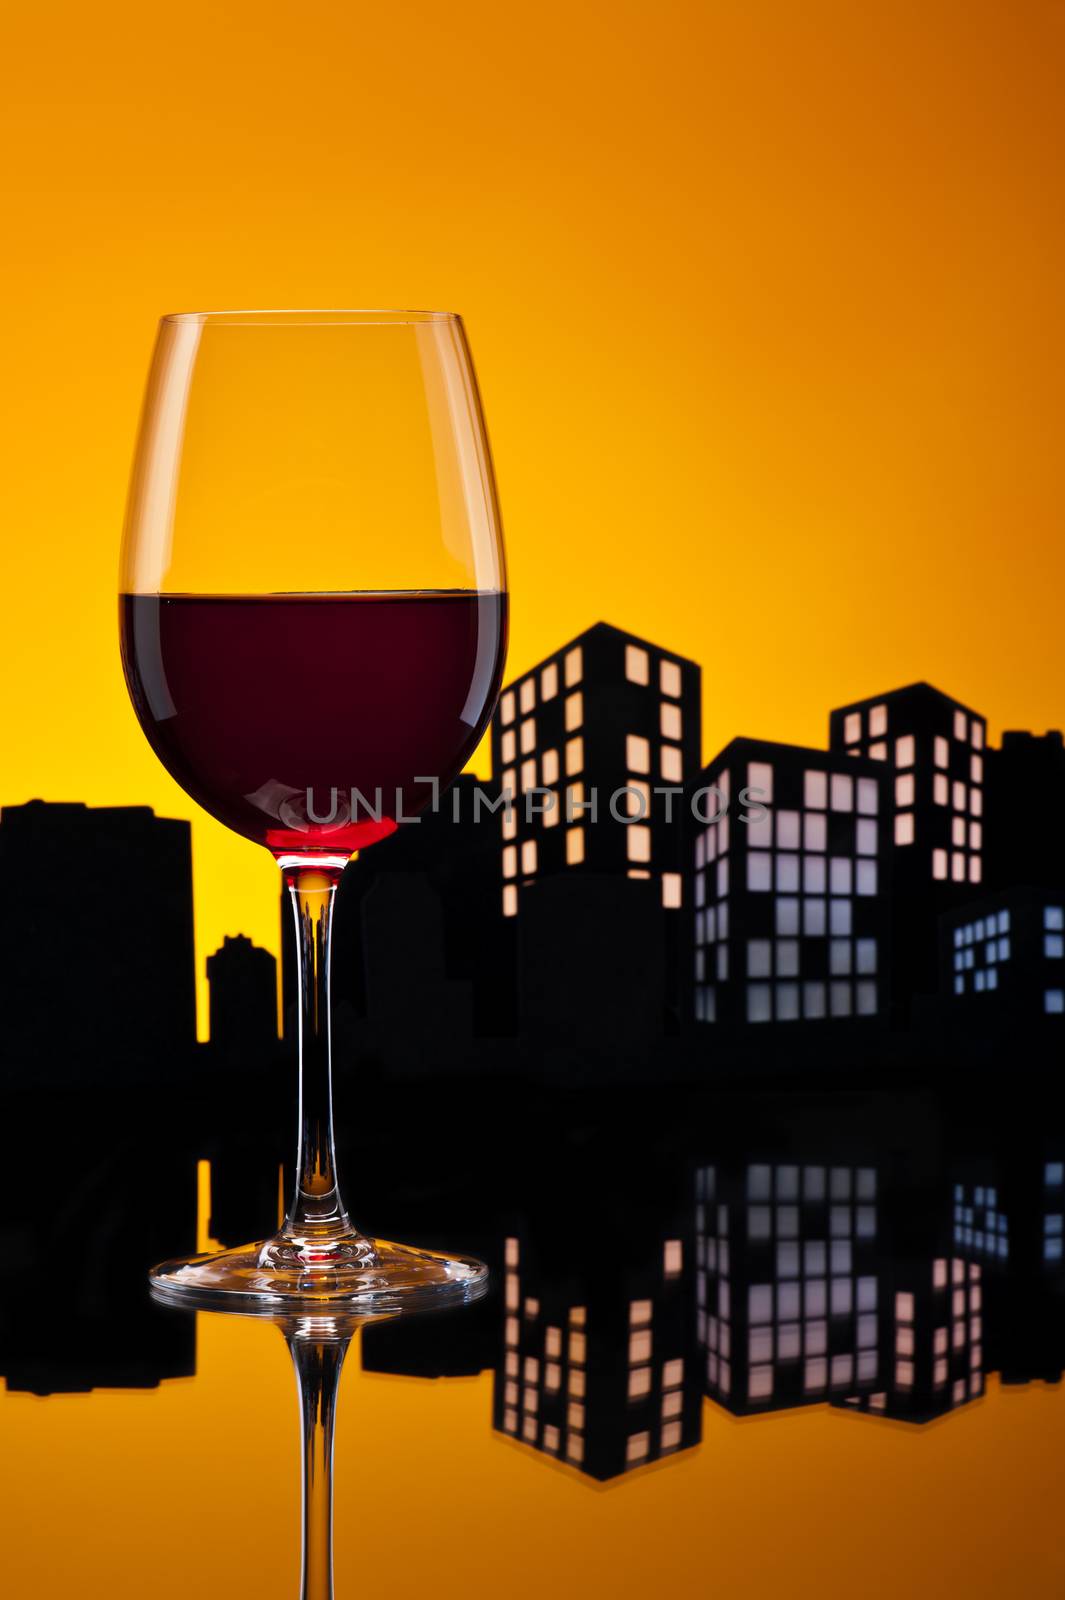 Metropolis Red Wine in city skyline setting